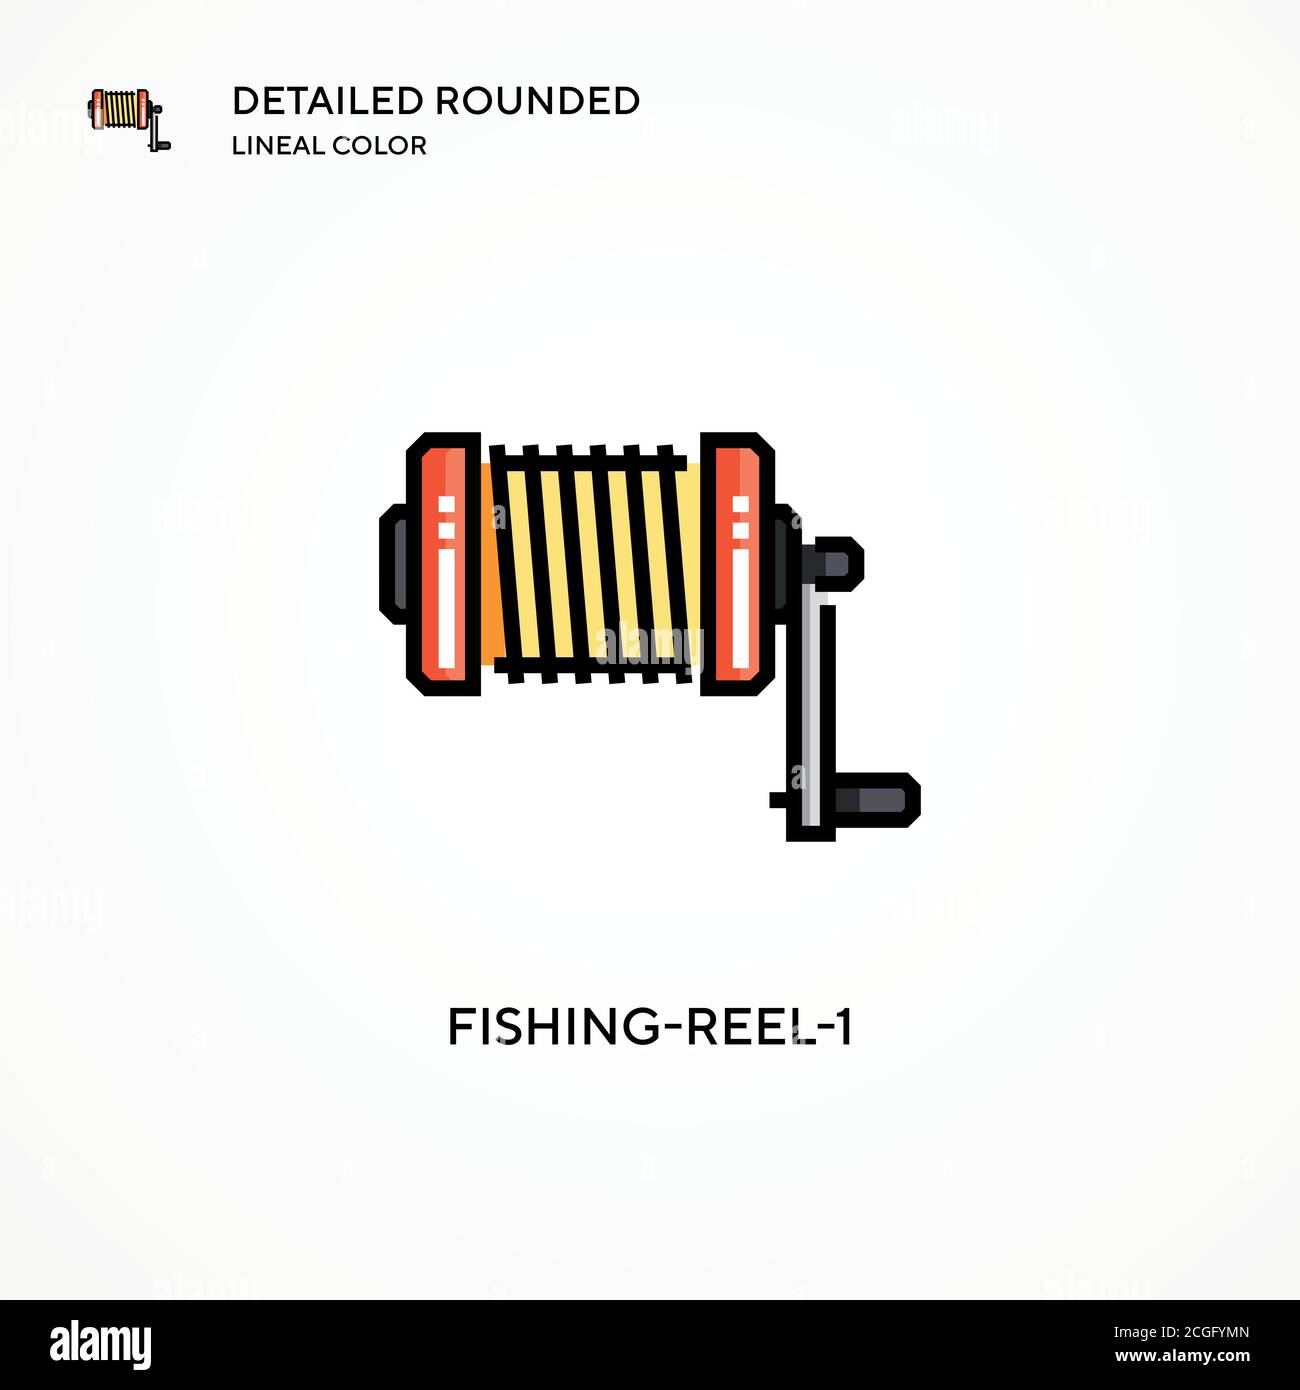 Fishing-reel-1 vector icon. Modern vector illustration concepts